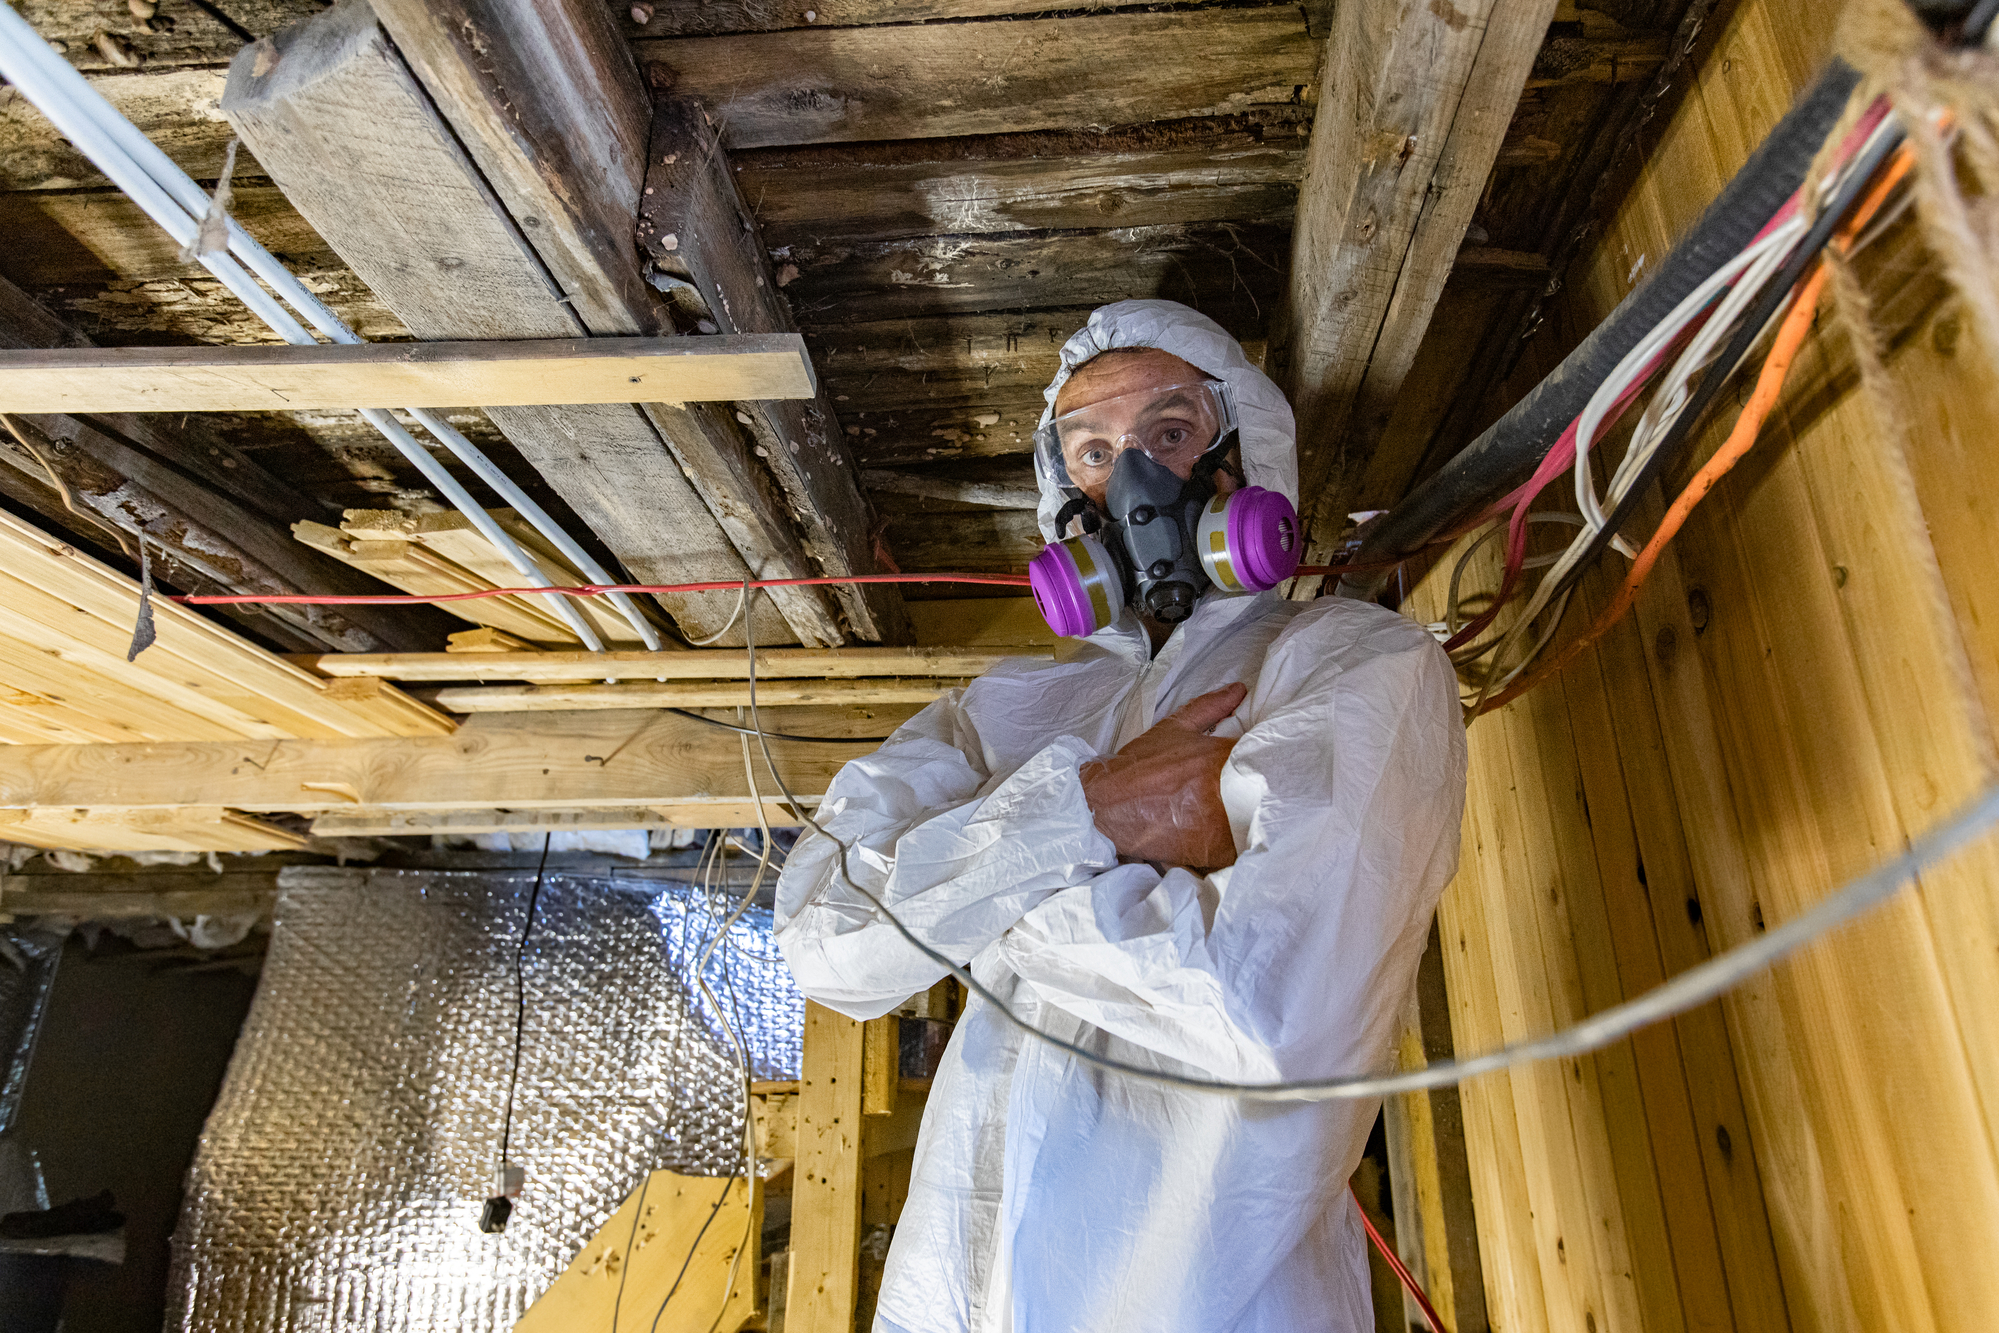 Contrcution and renovation activity can disturb inherently hazardous materials